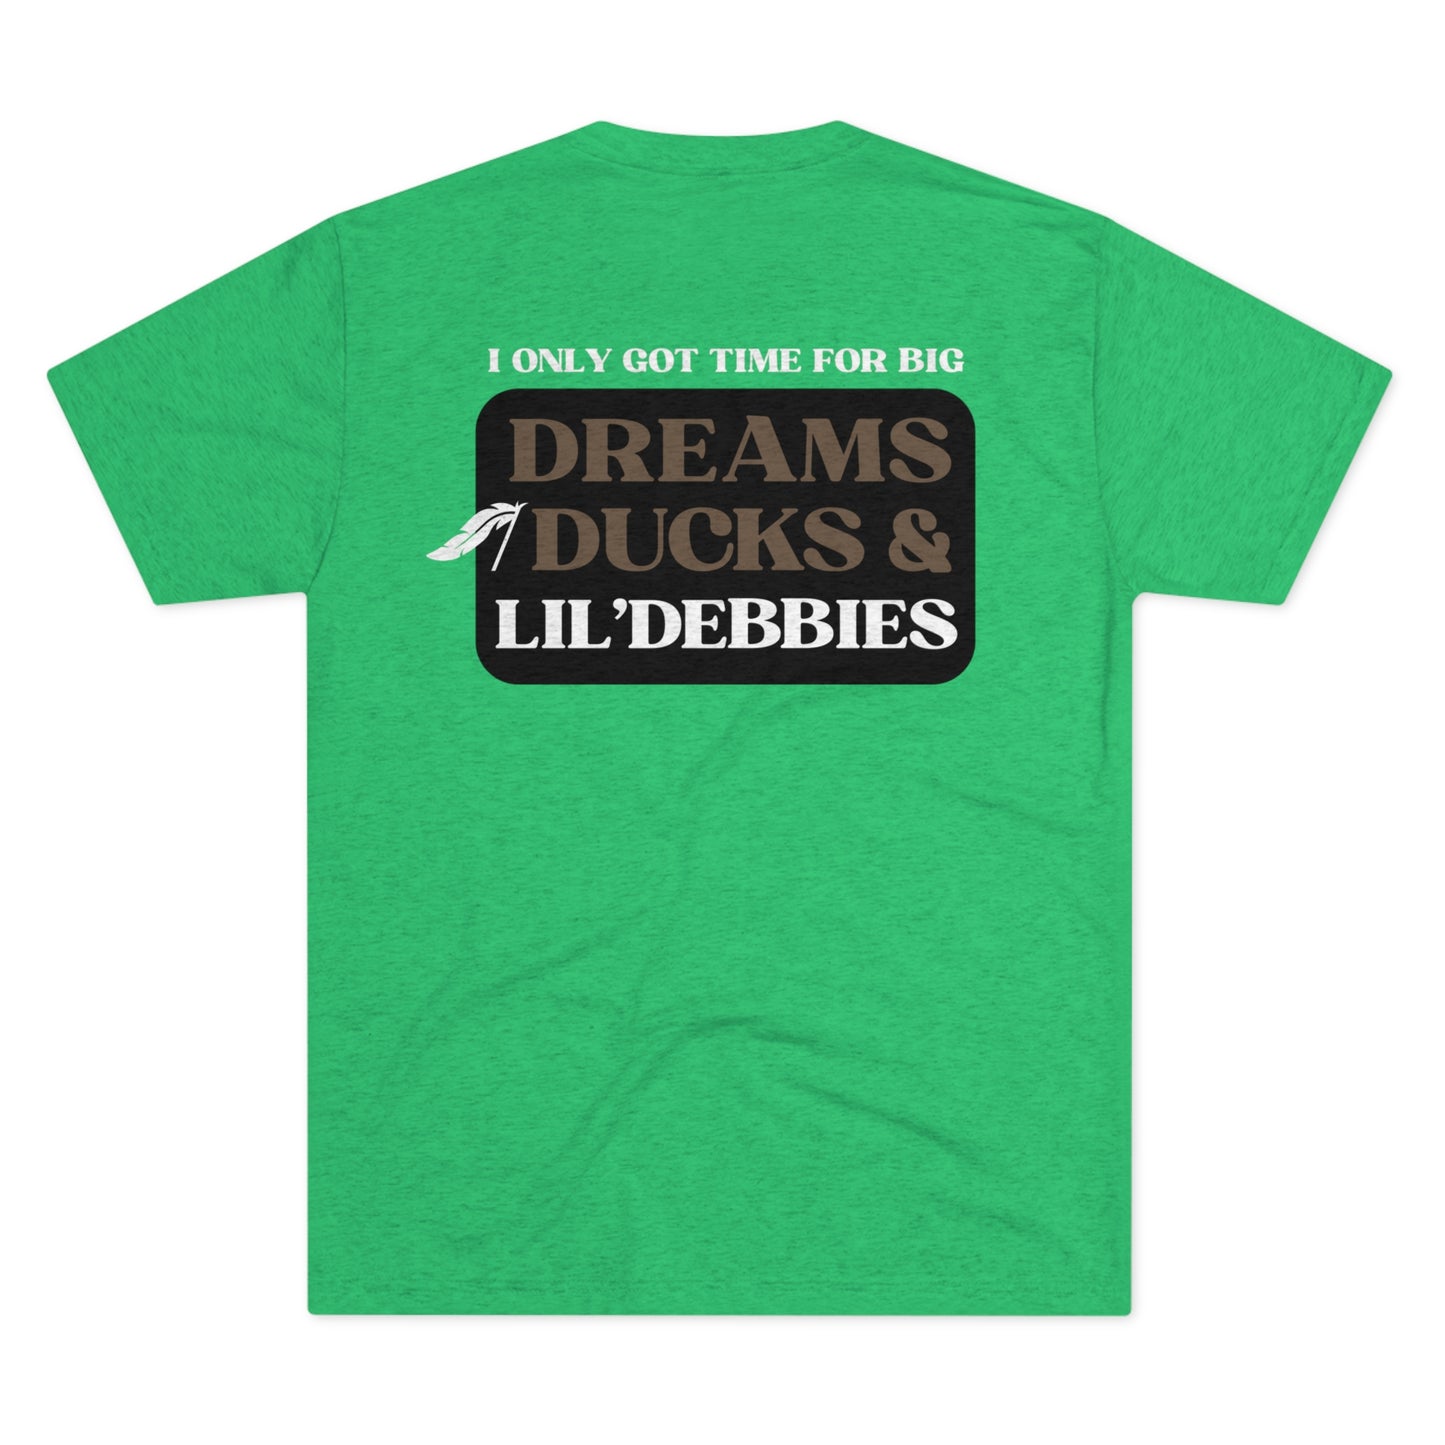 Dreams, Ducks & Lil' Debbies Tee (BACK DESIGN SHOWN / Multiple Colors)